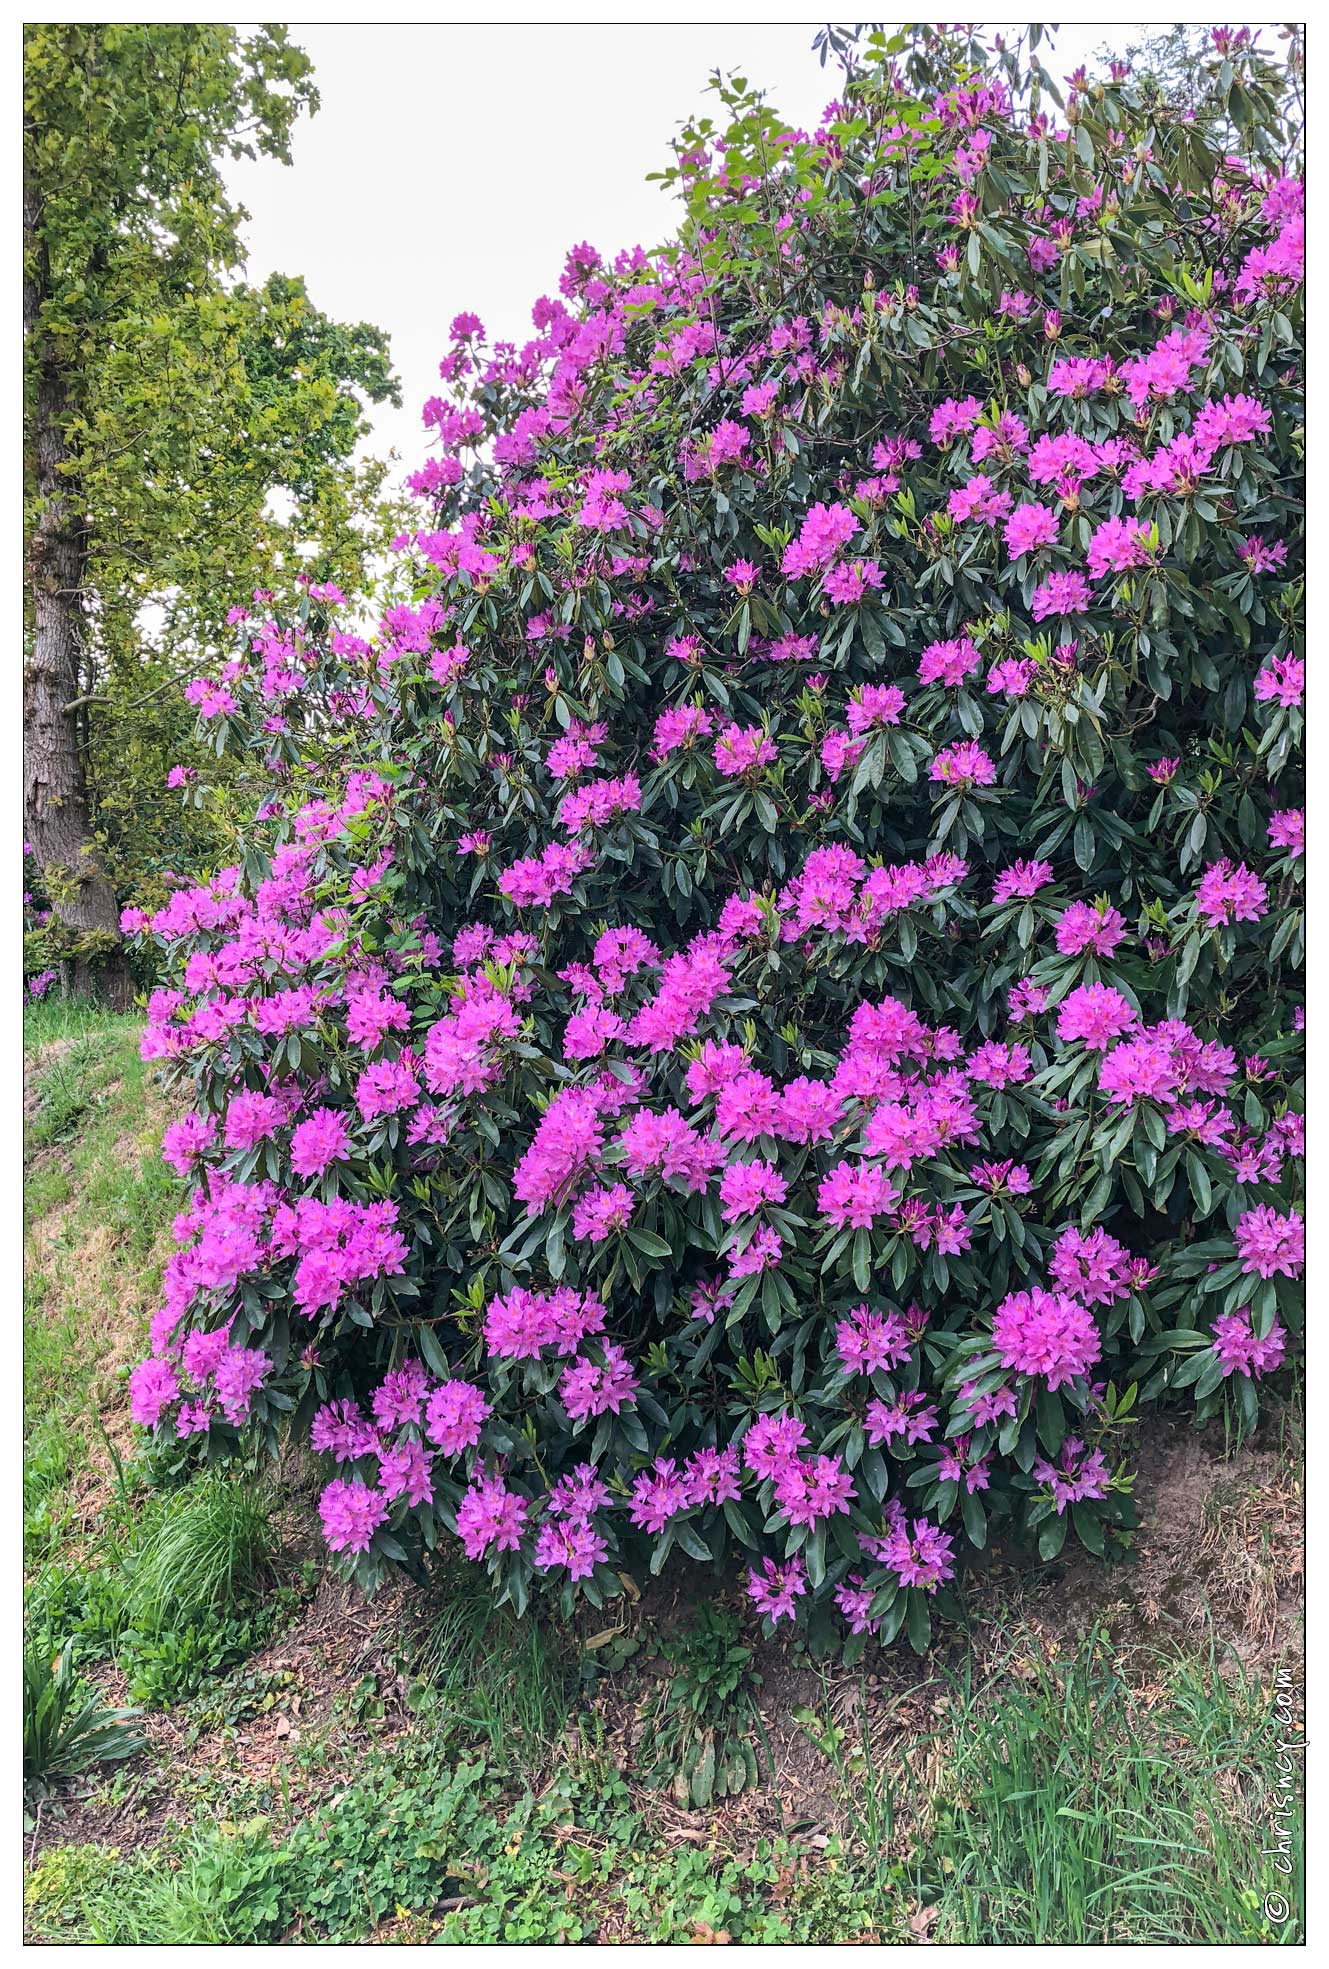 20180516-003_1894-Rhododendron.jpg